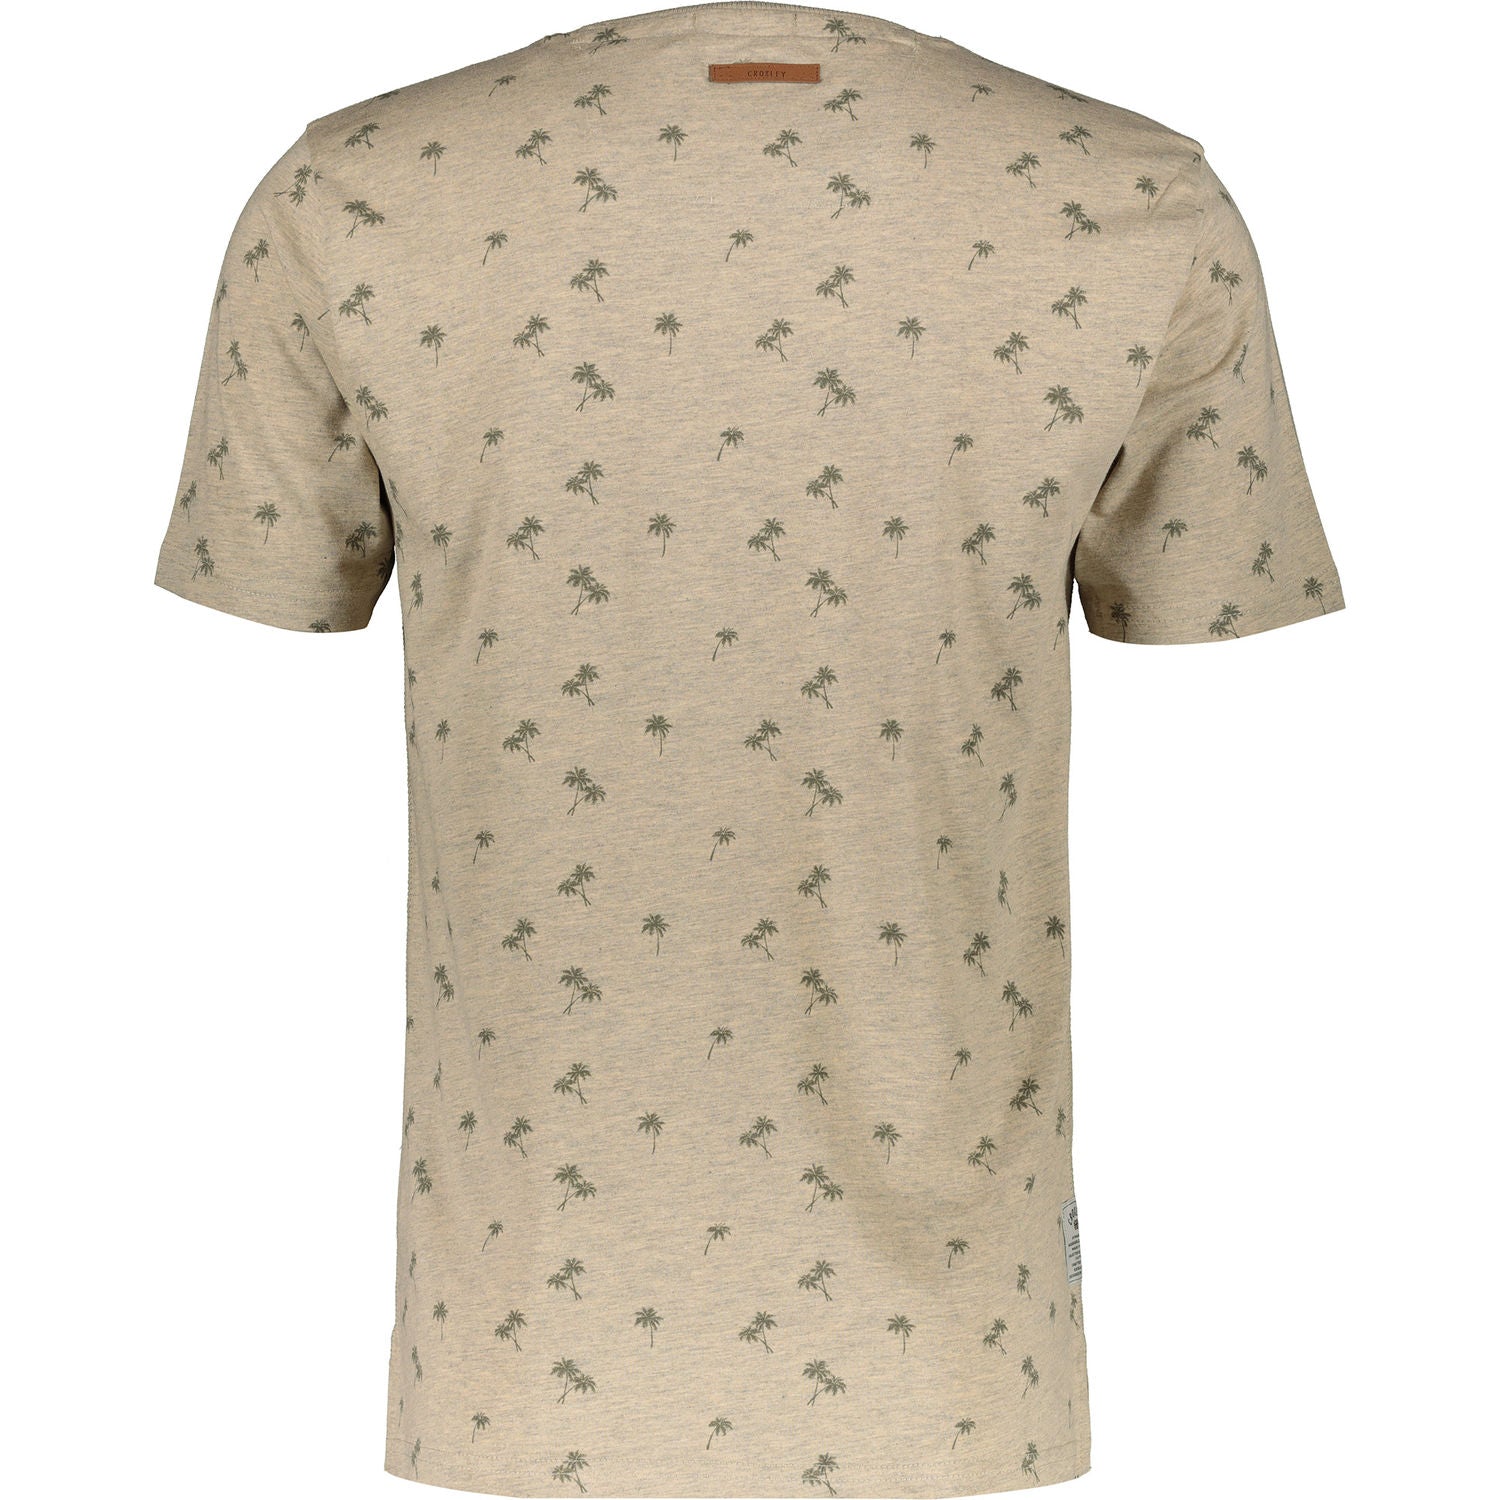 Croxley - Oxford T-Shirt - LabelledUp.com